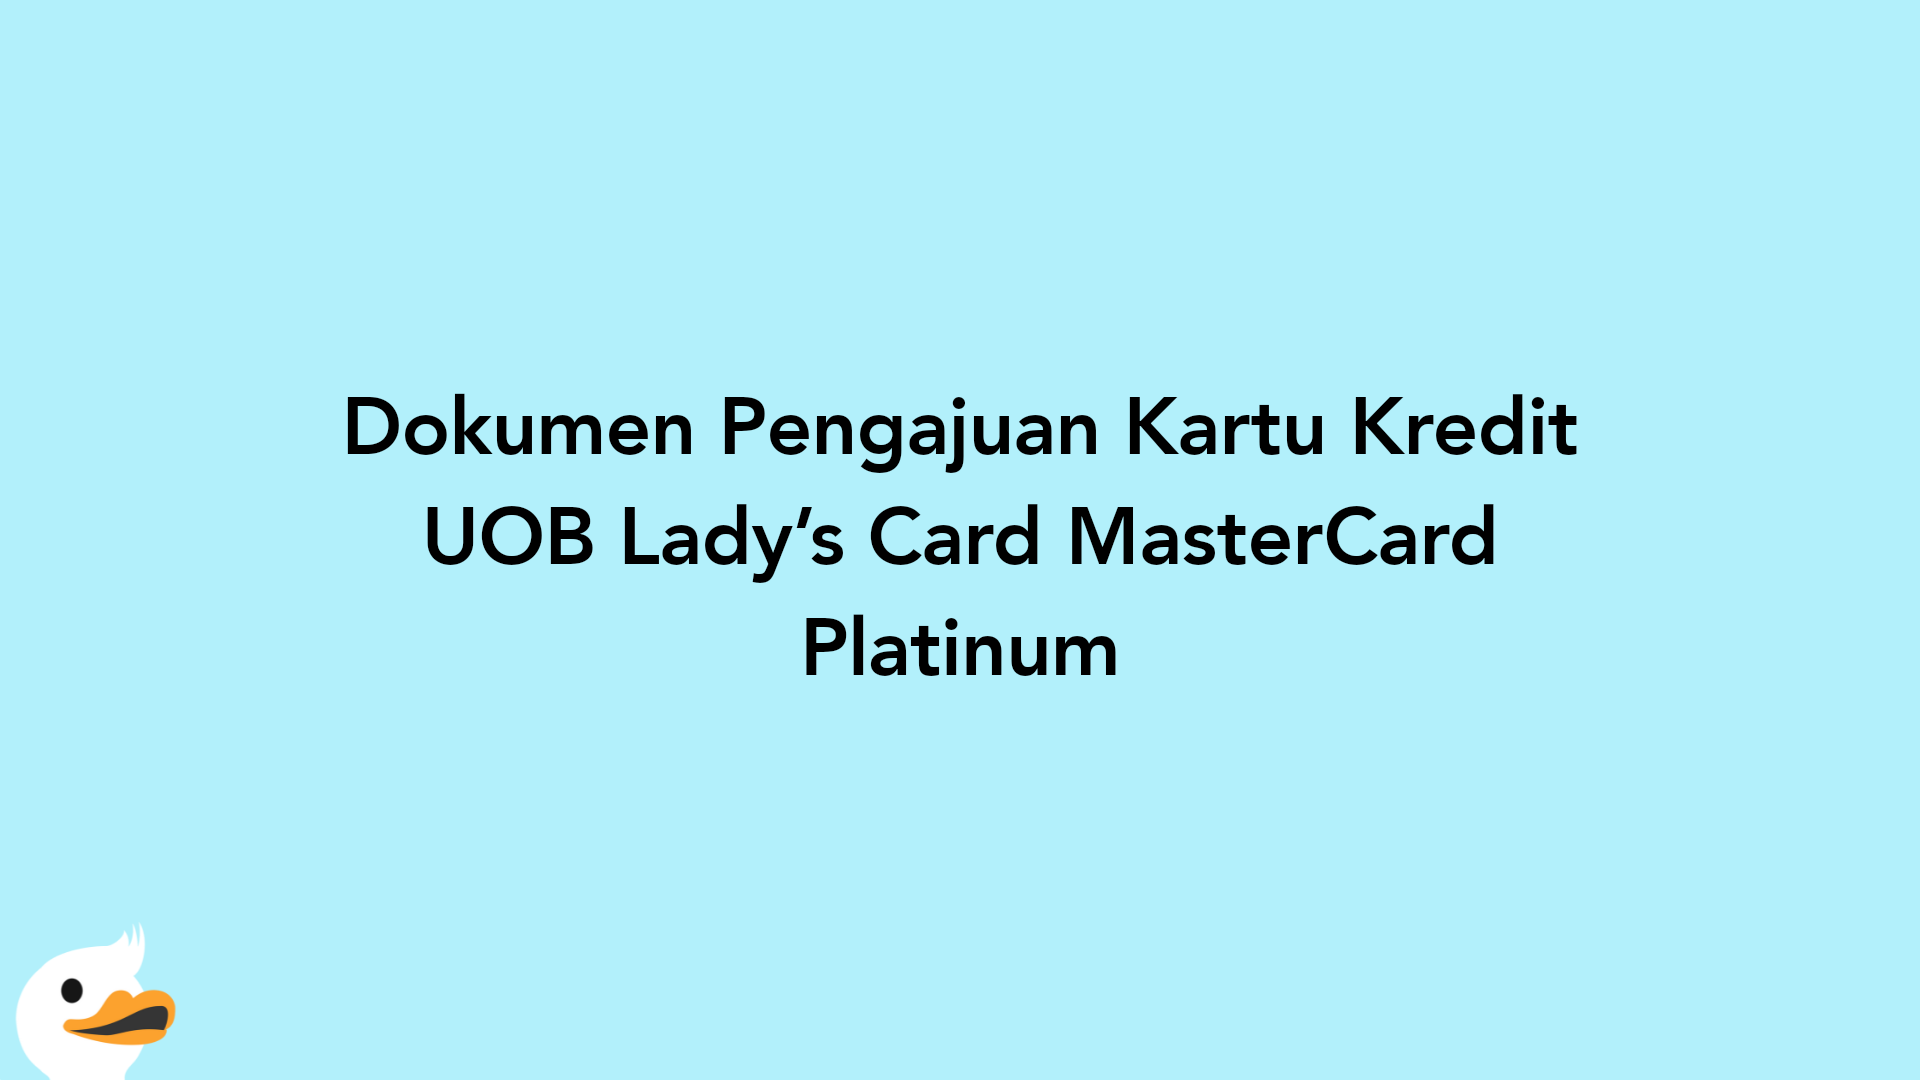 Dokumen Pengajuan Kartu Kredit UOB Lady’s Card MasterCard Platinum